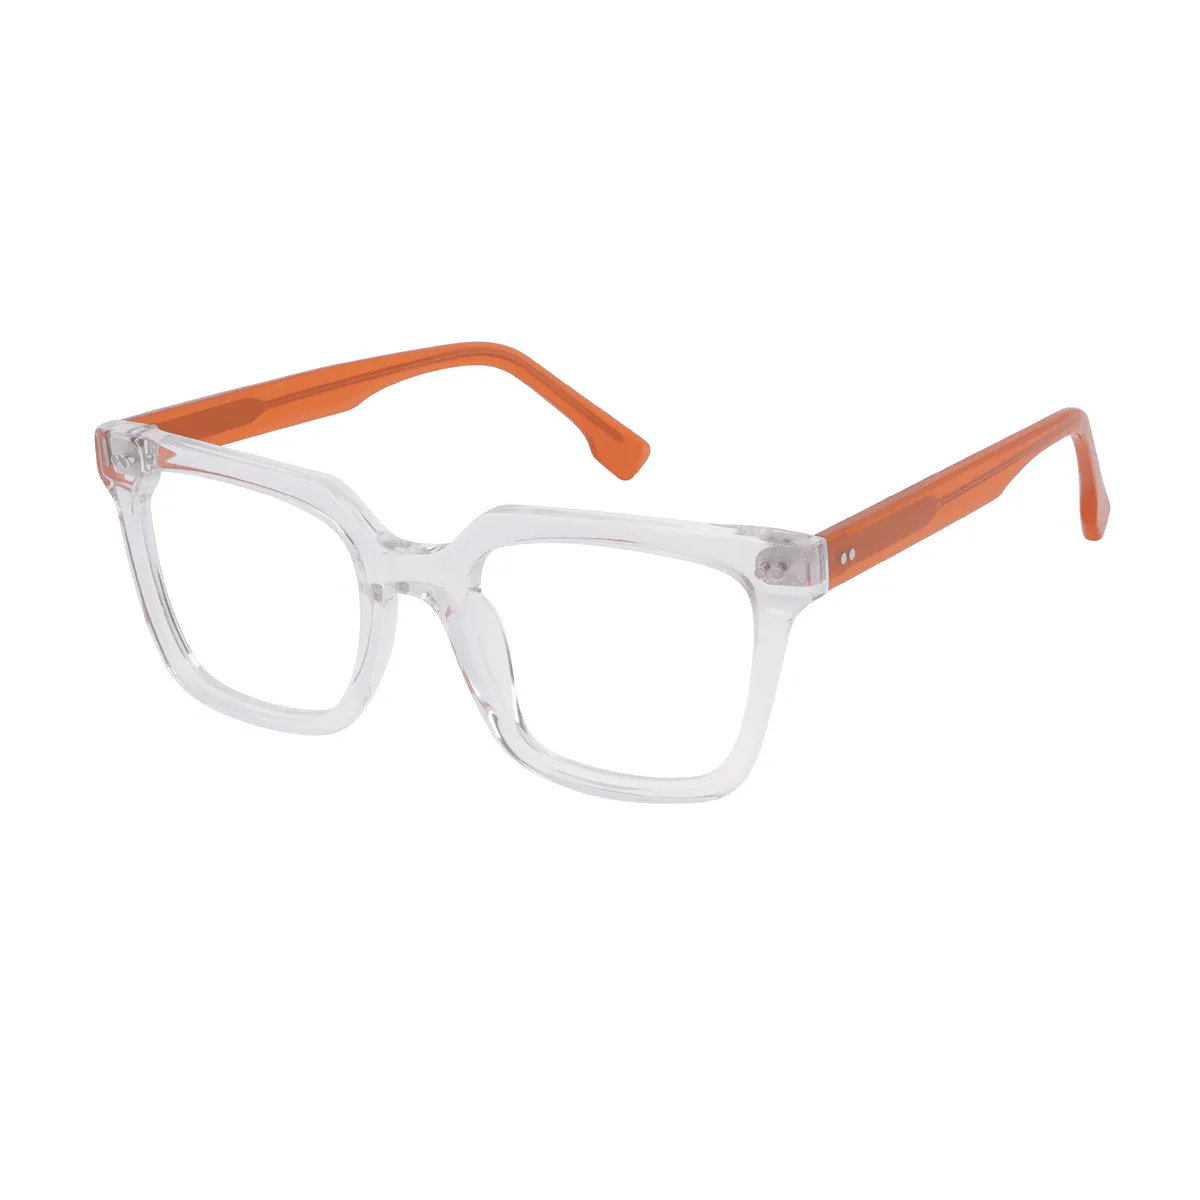 Laurie - Square Translucent-Orange Glasses for Men & Women - EFE